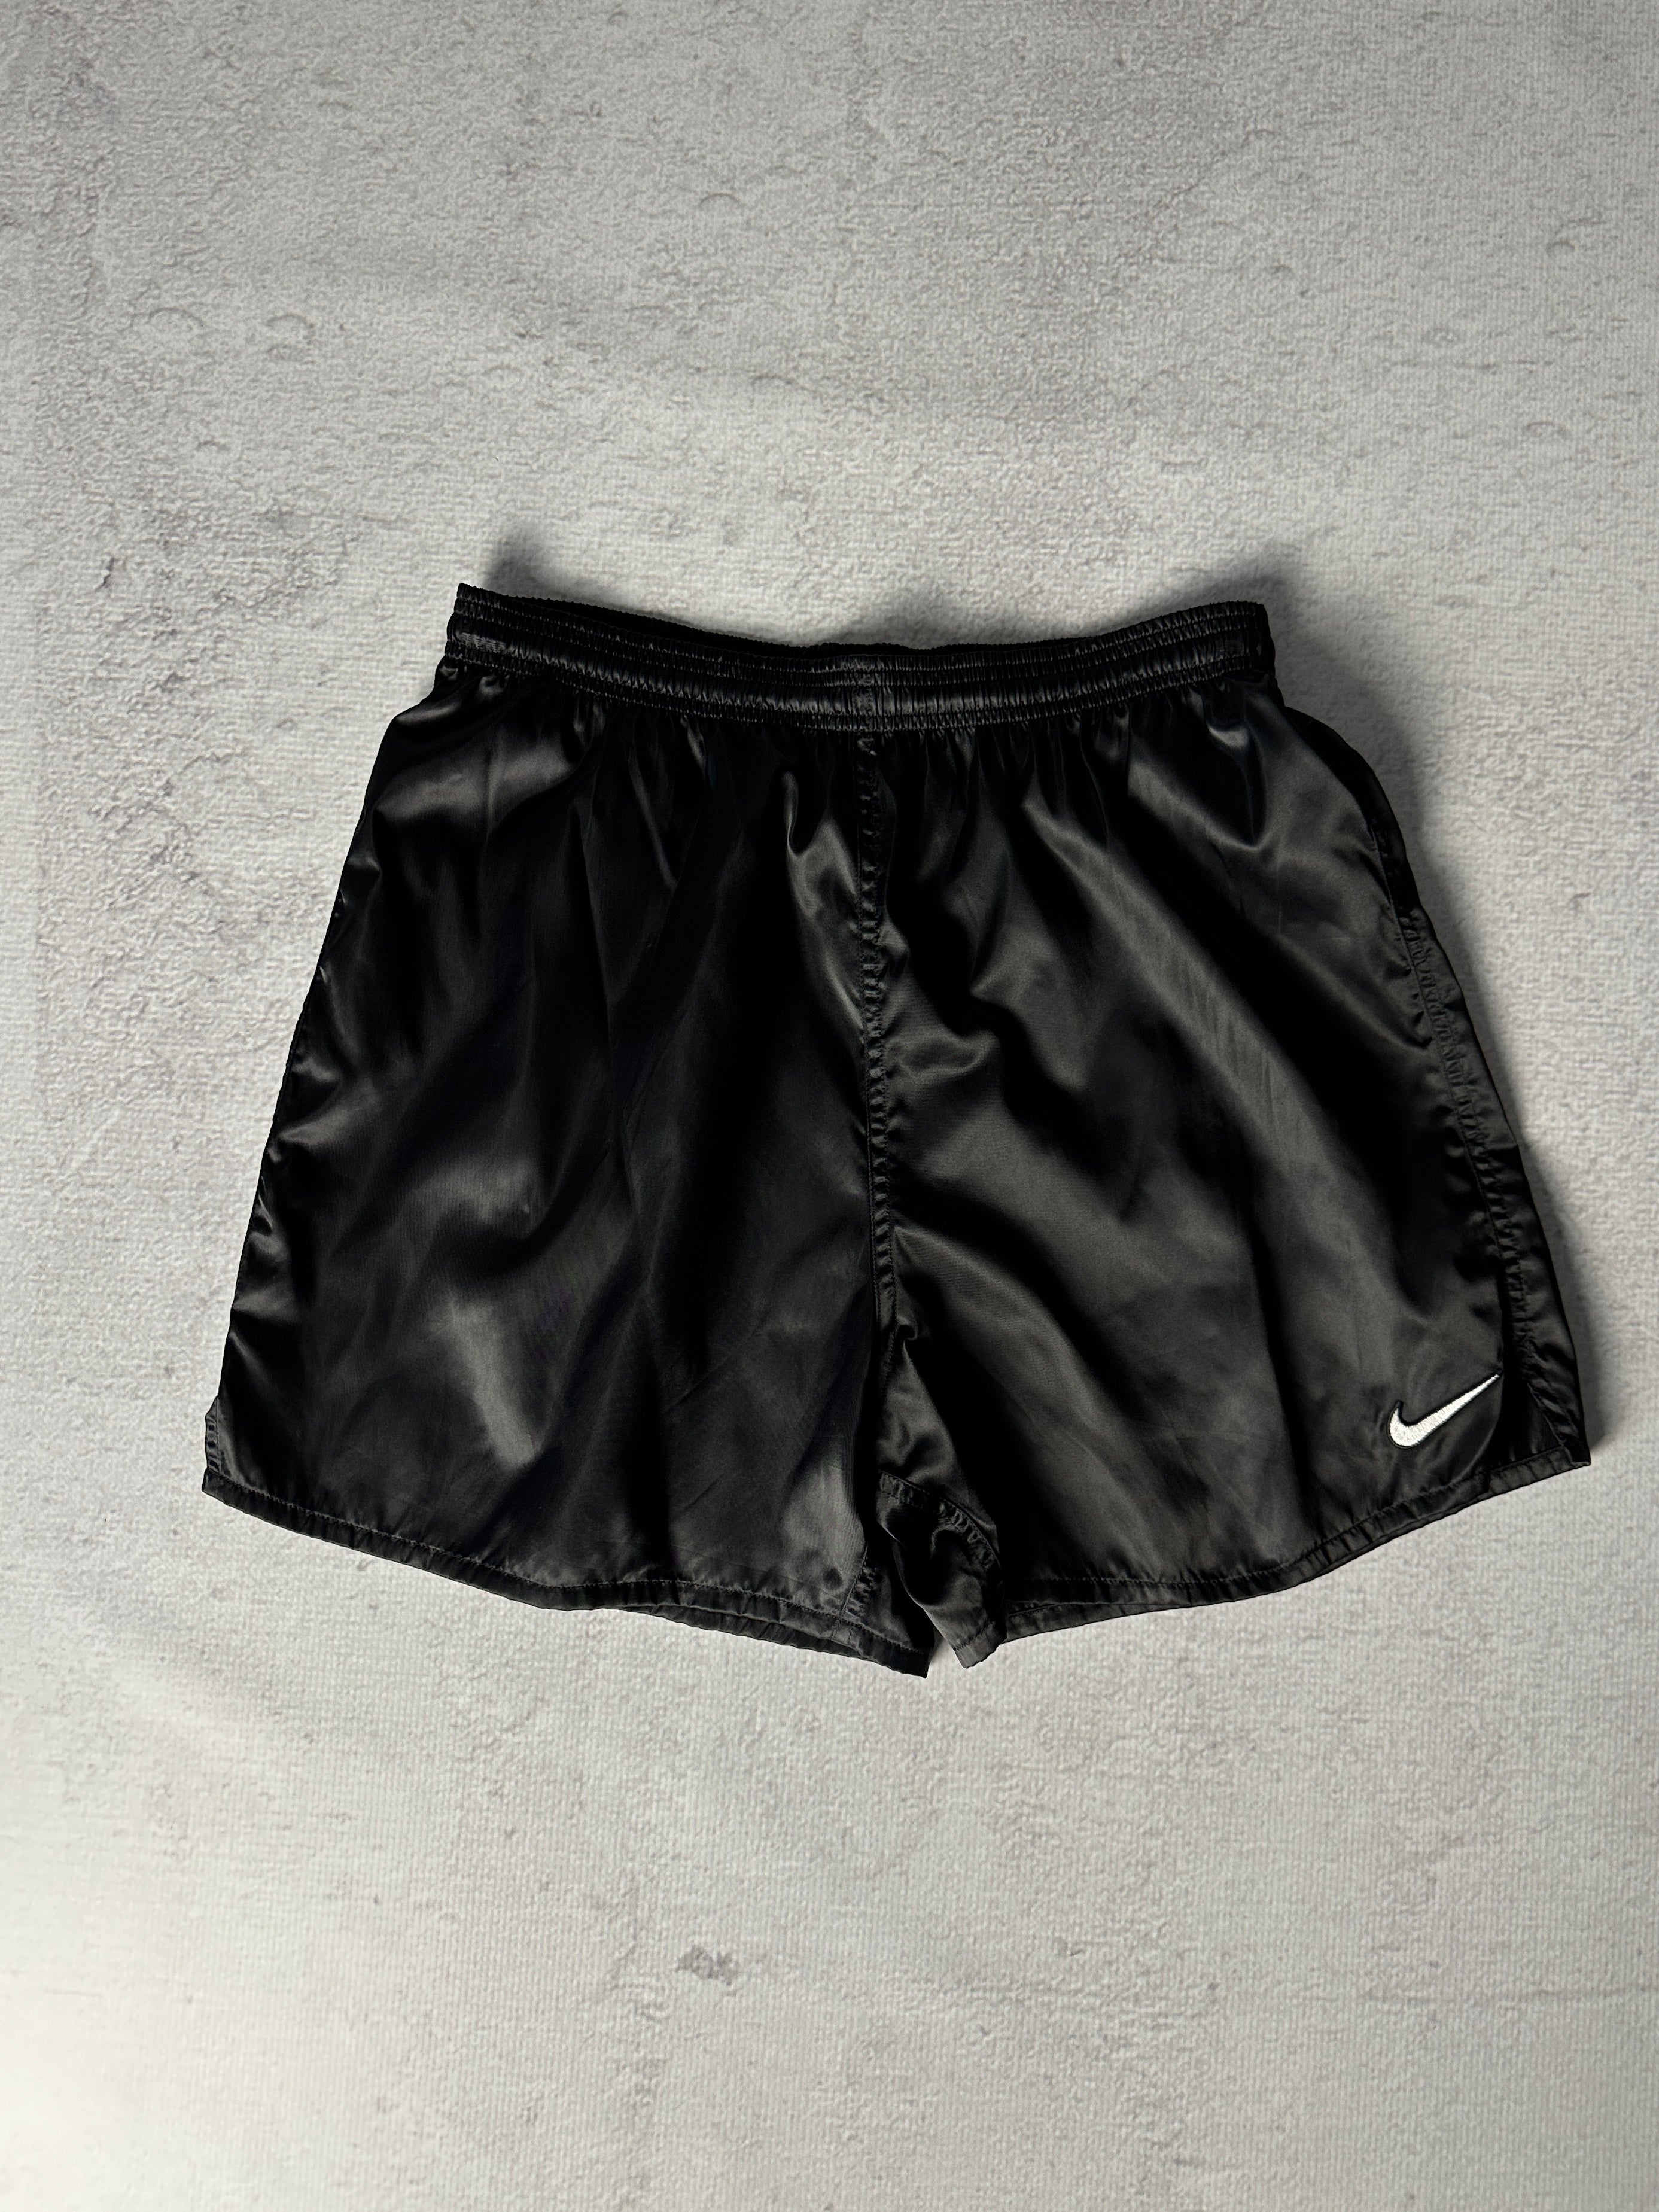 Vintage Nike Track Shorts - Men's Medium